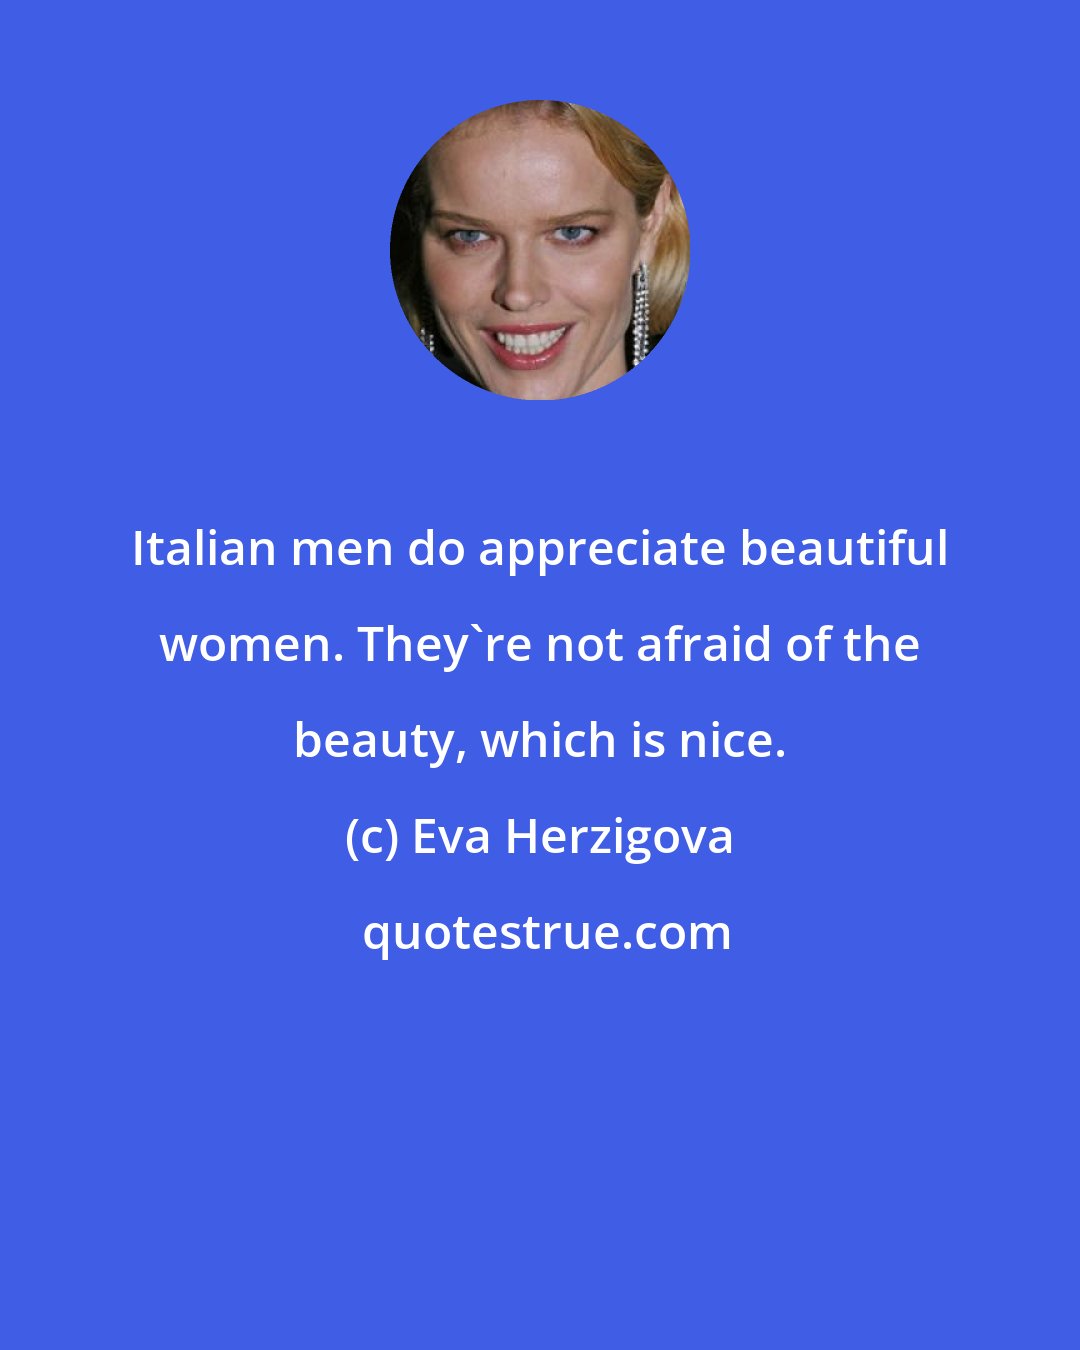 Eva Herzigova: Italian men do appreciate beautiful women. They're not afraid of the beauty, which is nice.